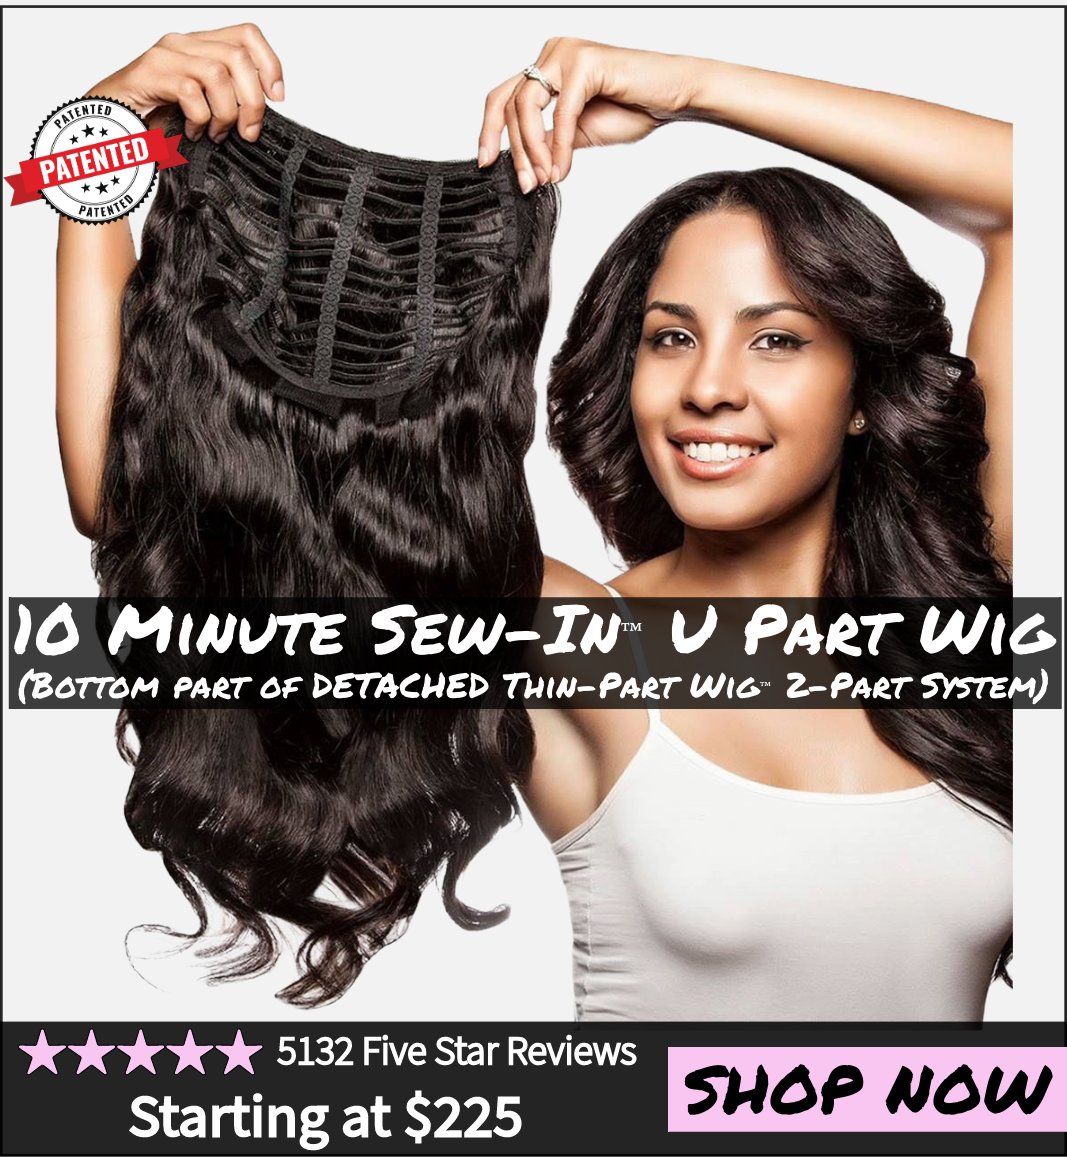 2 Minute U-Part Wig Install (No Sewing!) 